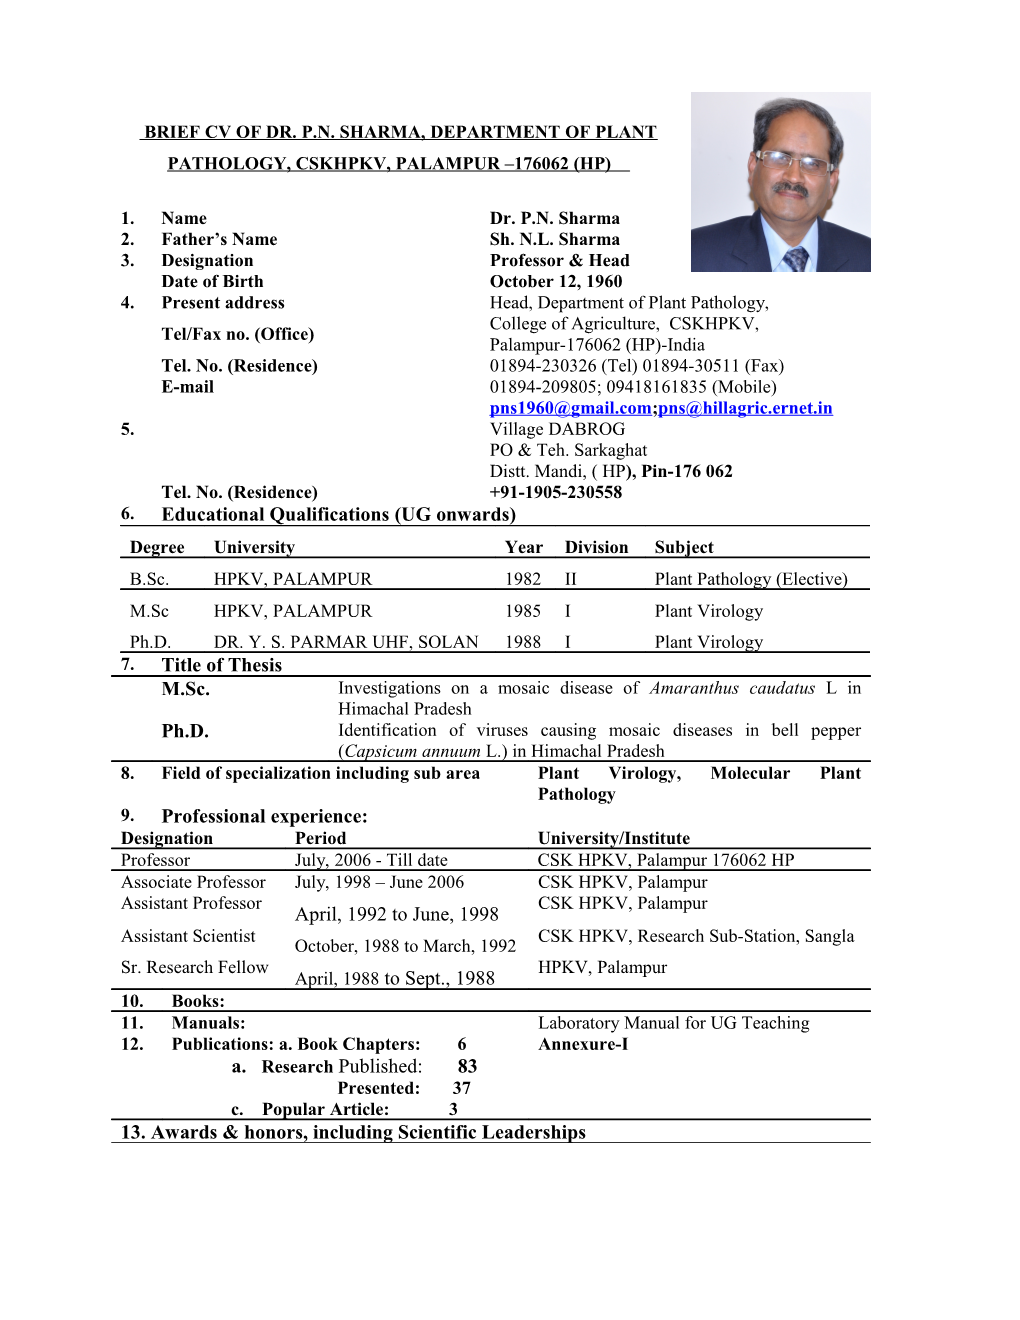 Brief CV of Dr. P.N. Sharma, Department of Plant Pathology, CSKHPKV, Palampur 176062 (HP)